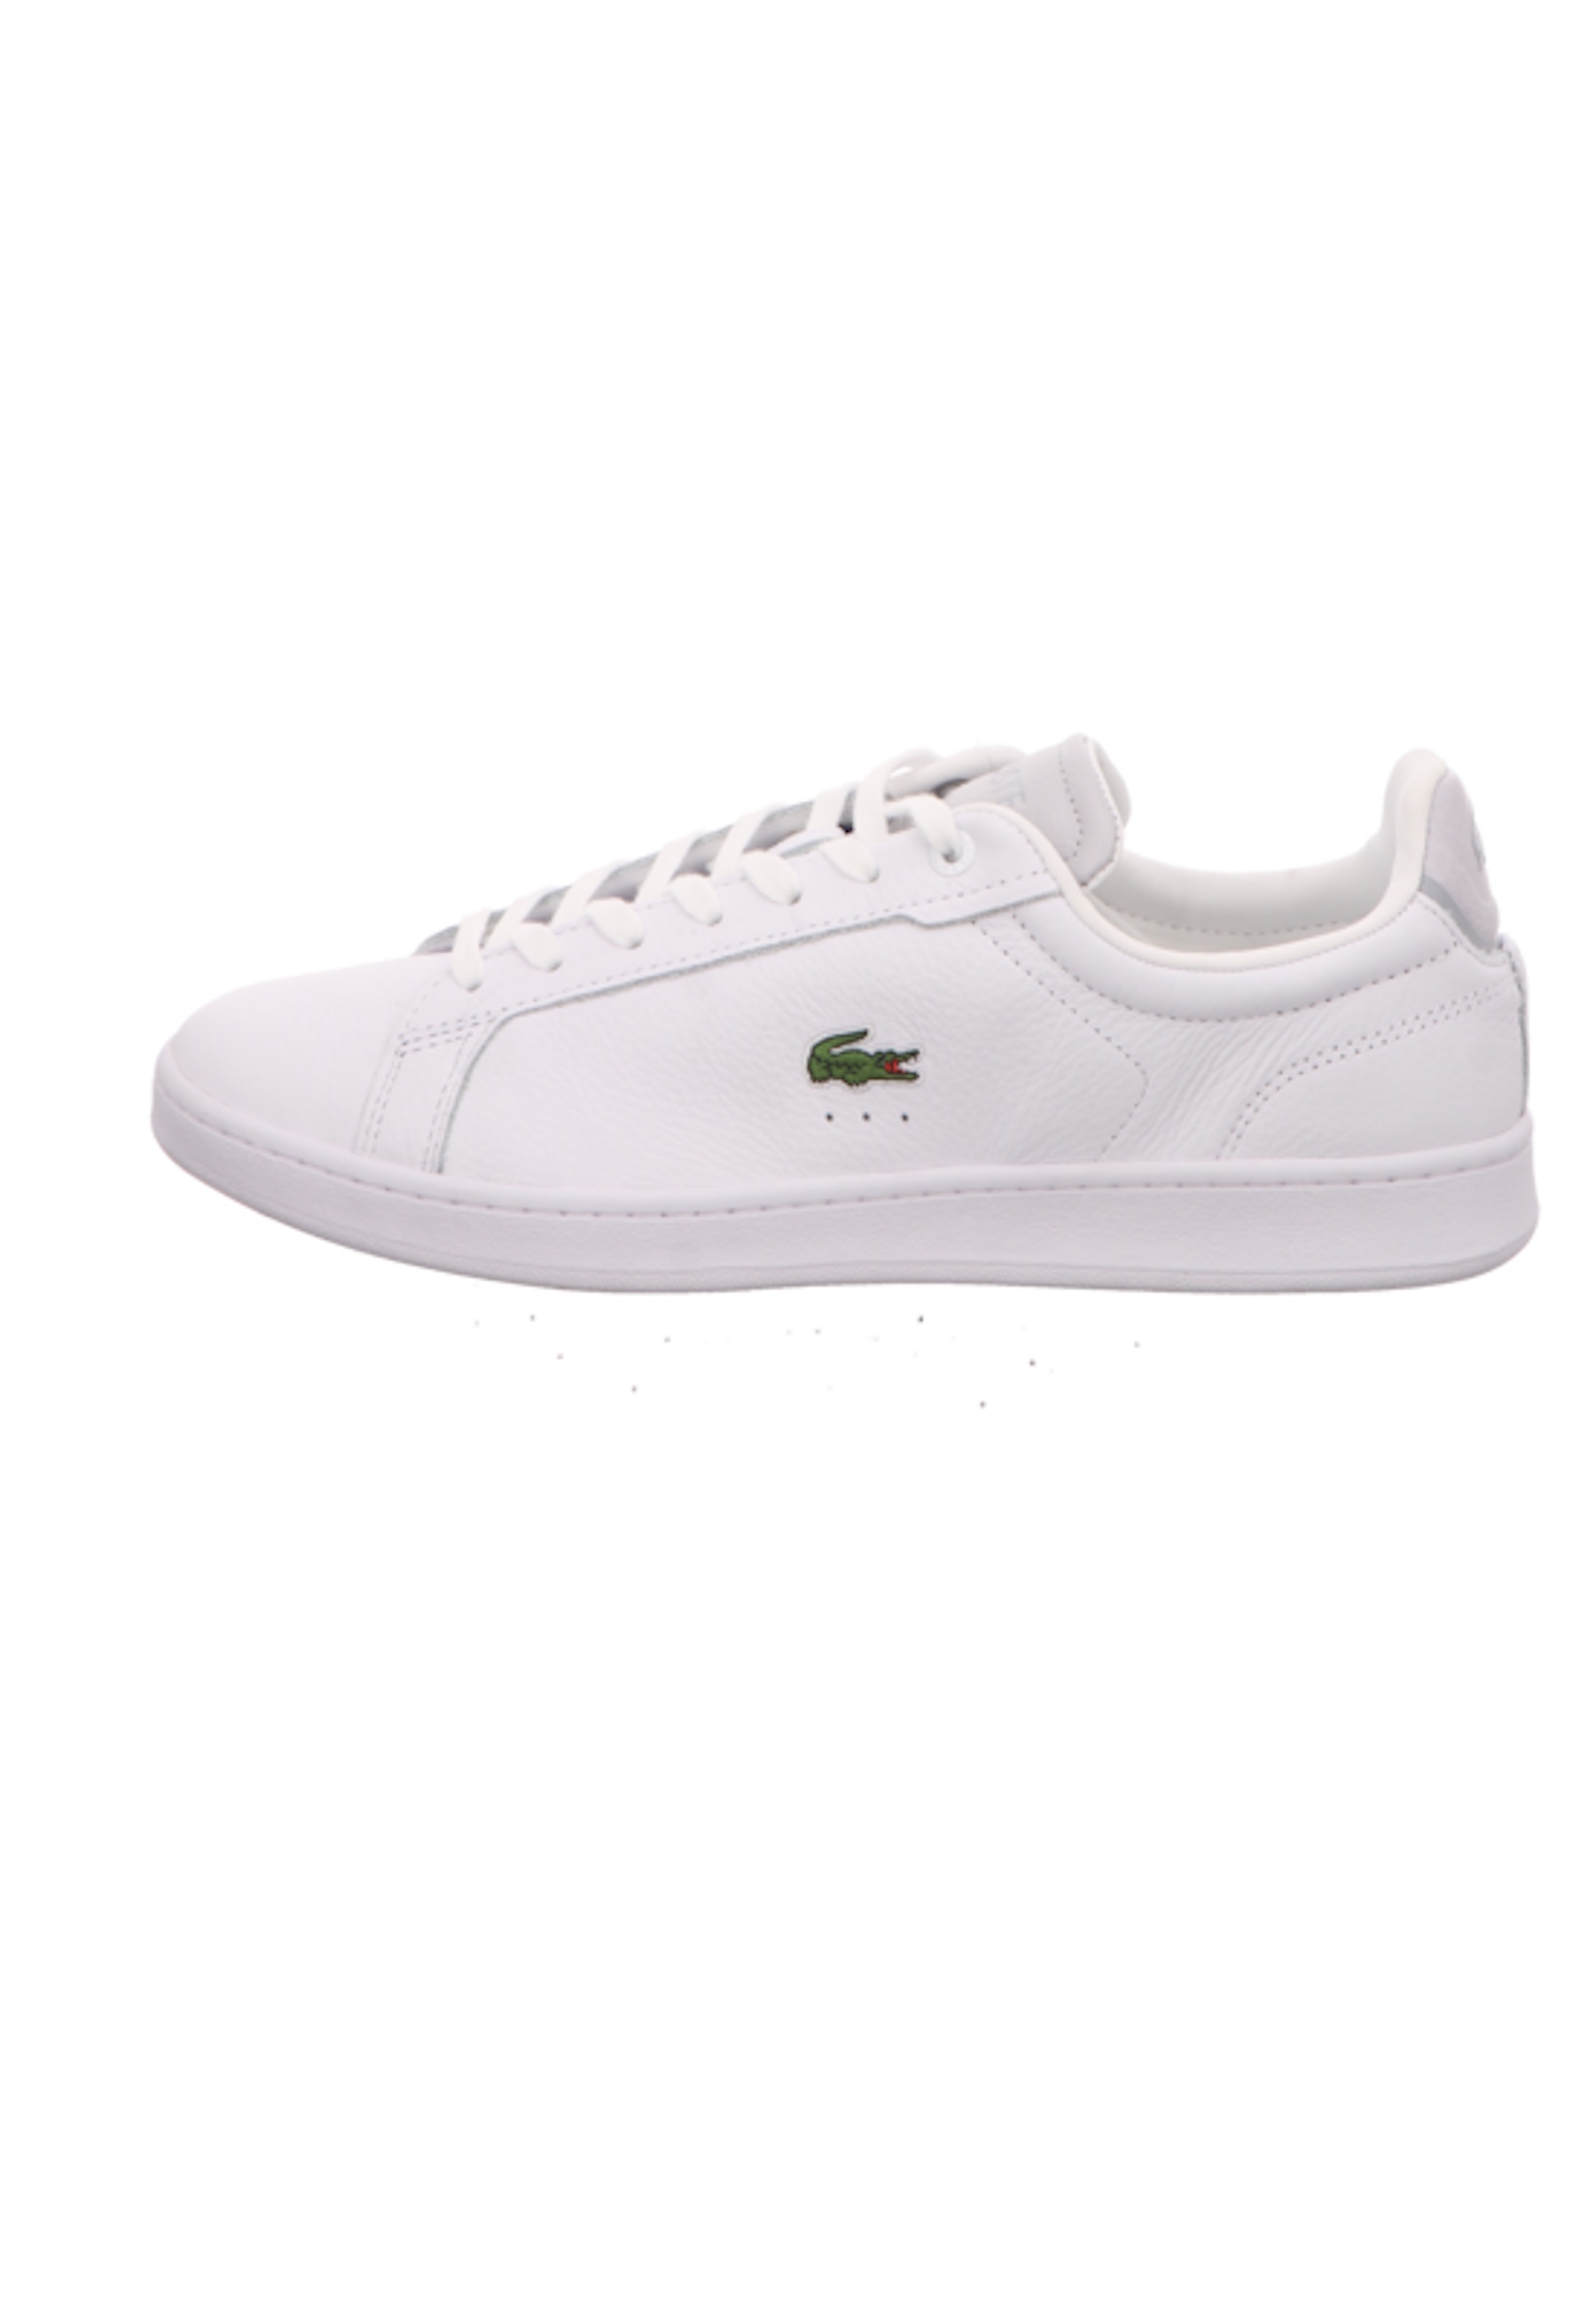 Низкие кроссовки Lacoste 'Carnaby Pro', белый низкие кроссовки carnaby pro lacoste цвет off white